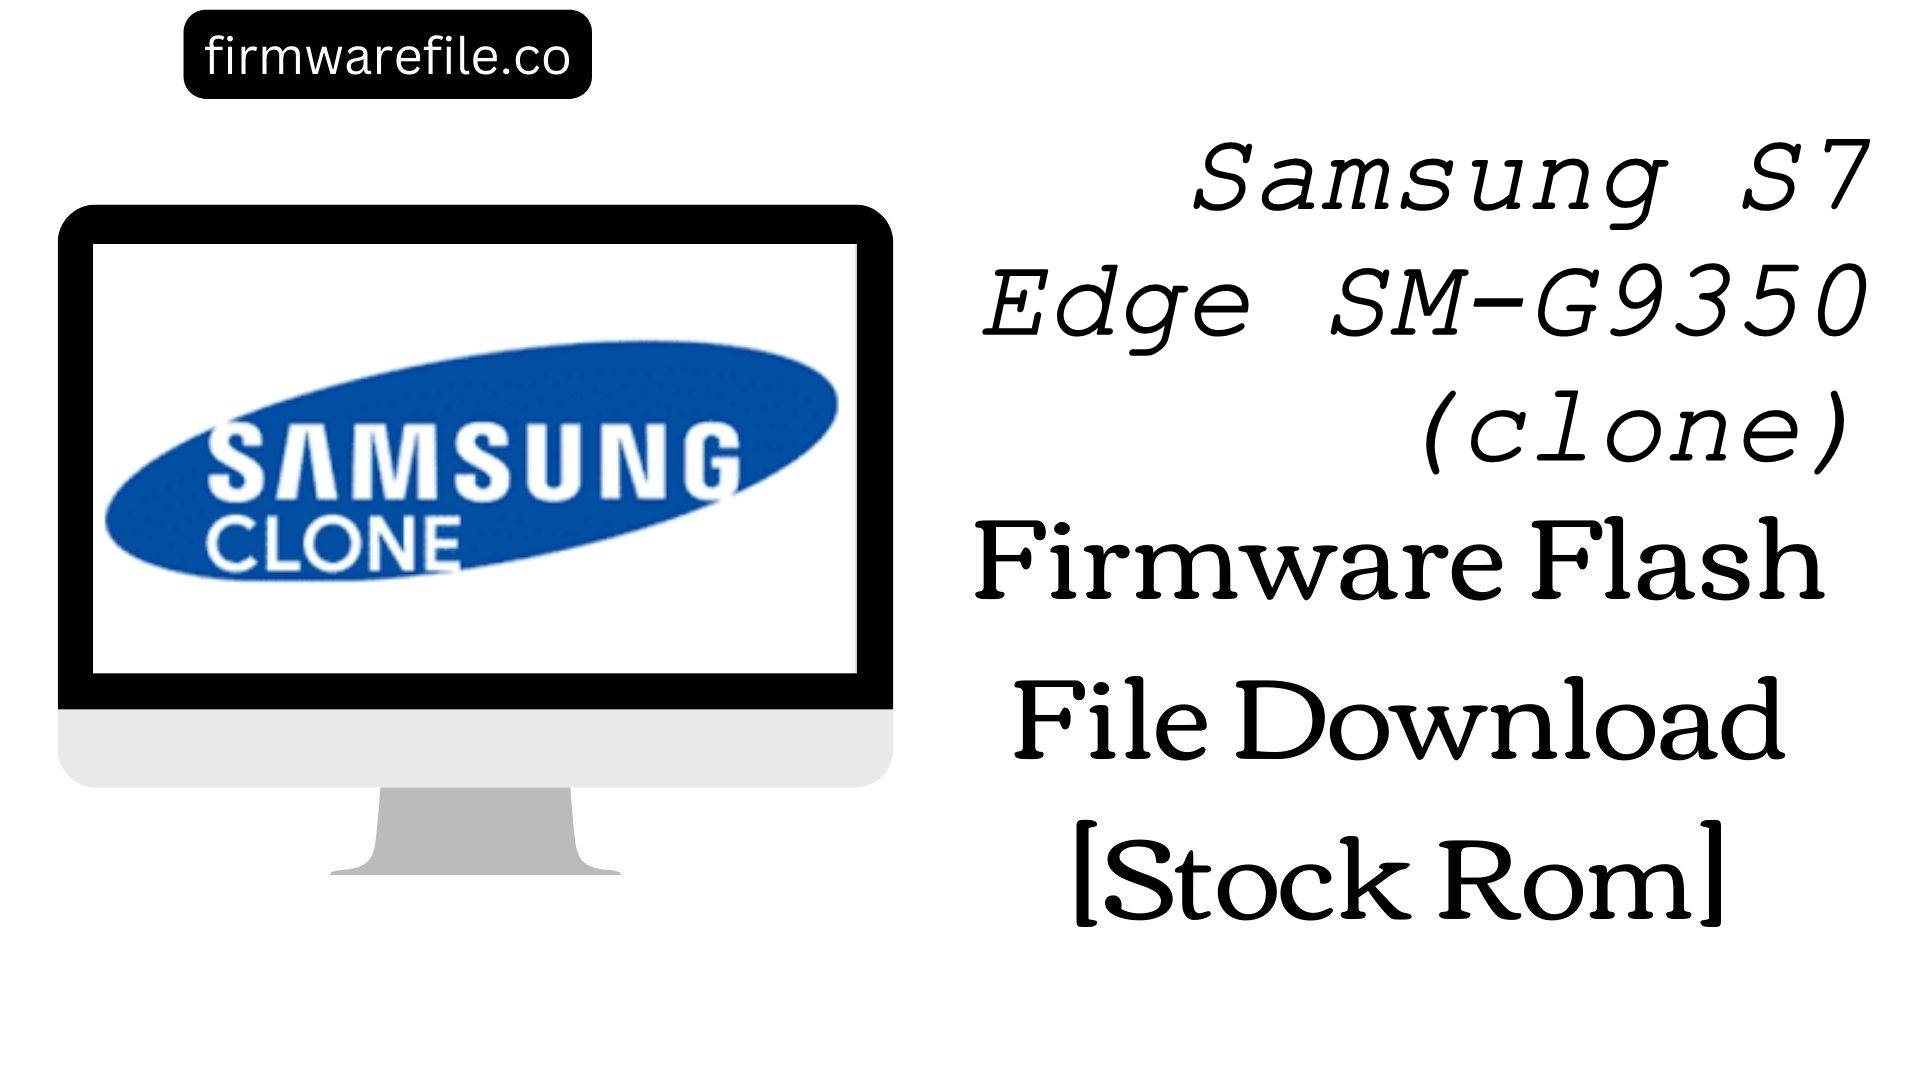 Samsung S7 Edge SM G9350 clone